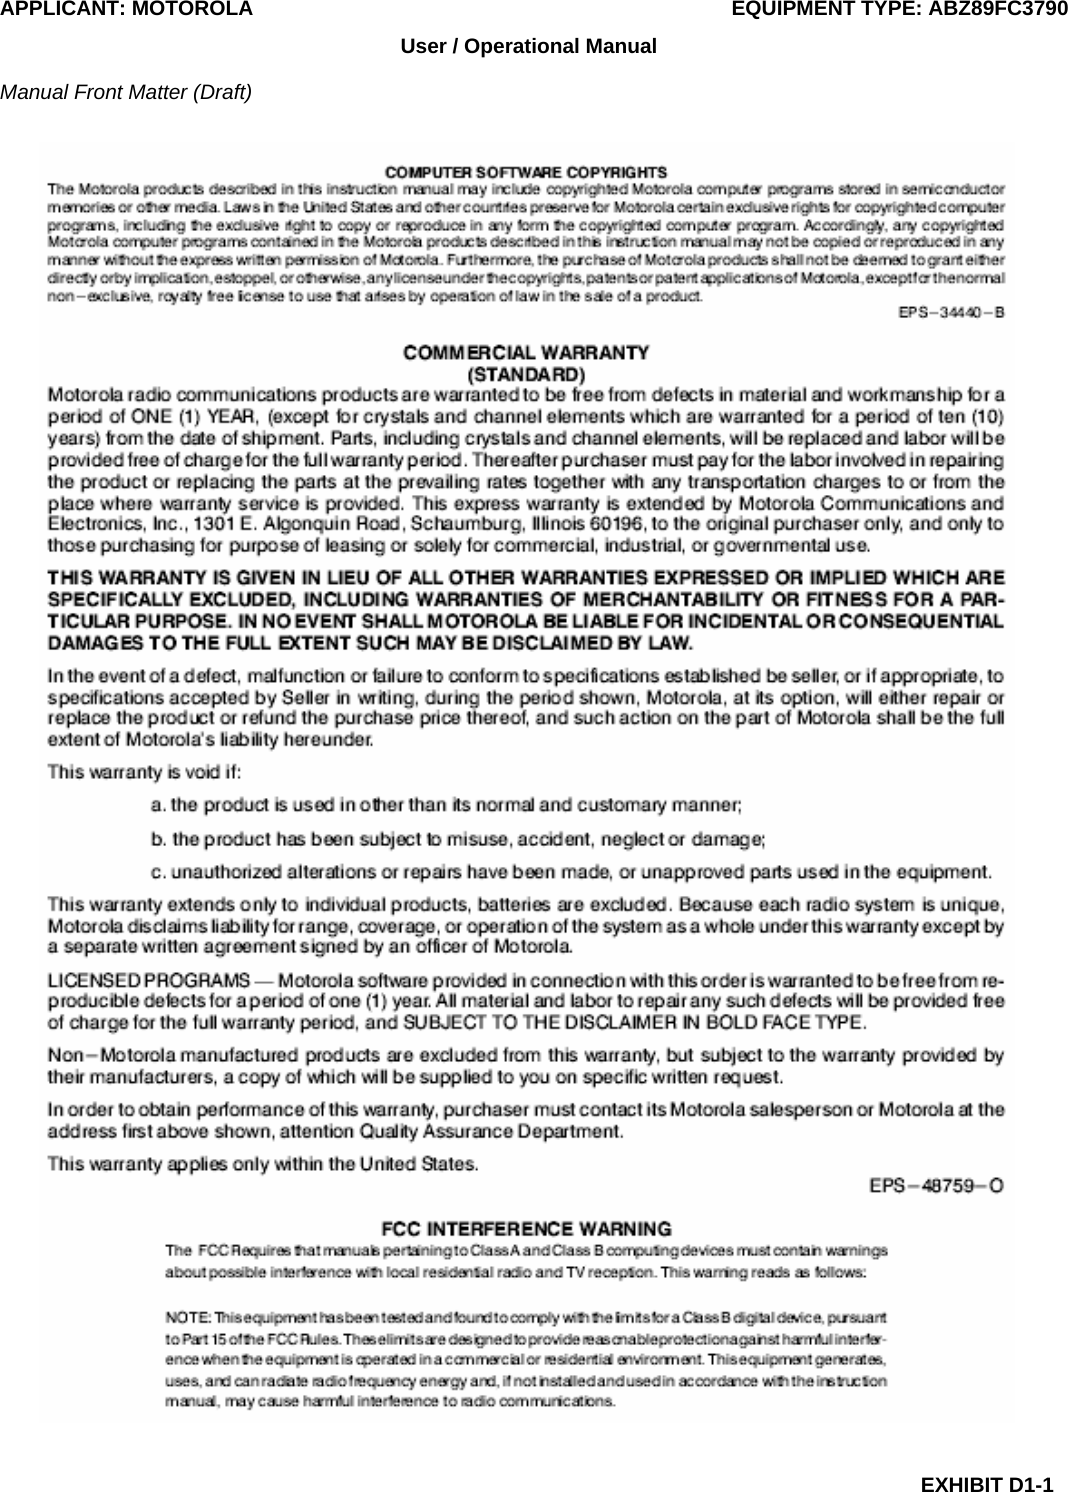 APPLICANT: MOTOROLA  EQUIPMENT TYPE: ABZ89FC3790 EXHIBIT D1-1 User / Operational Manual  Manual Front Matter (Draft) 